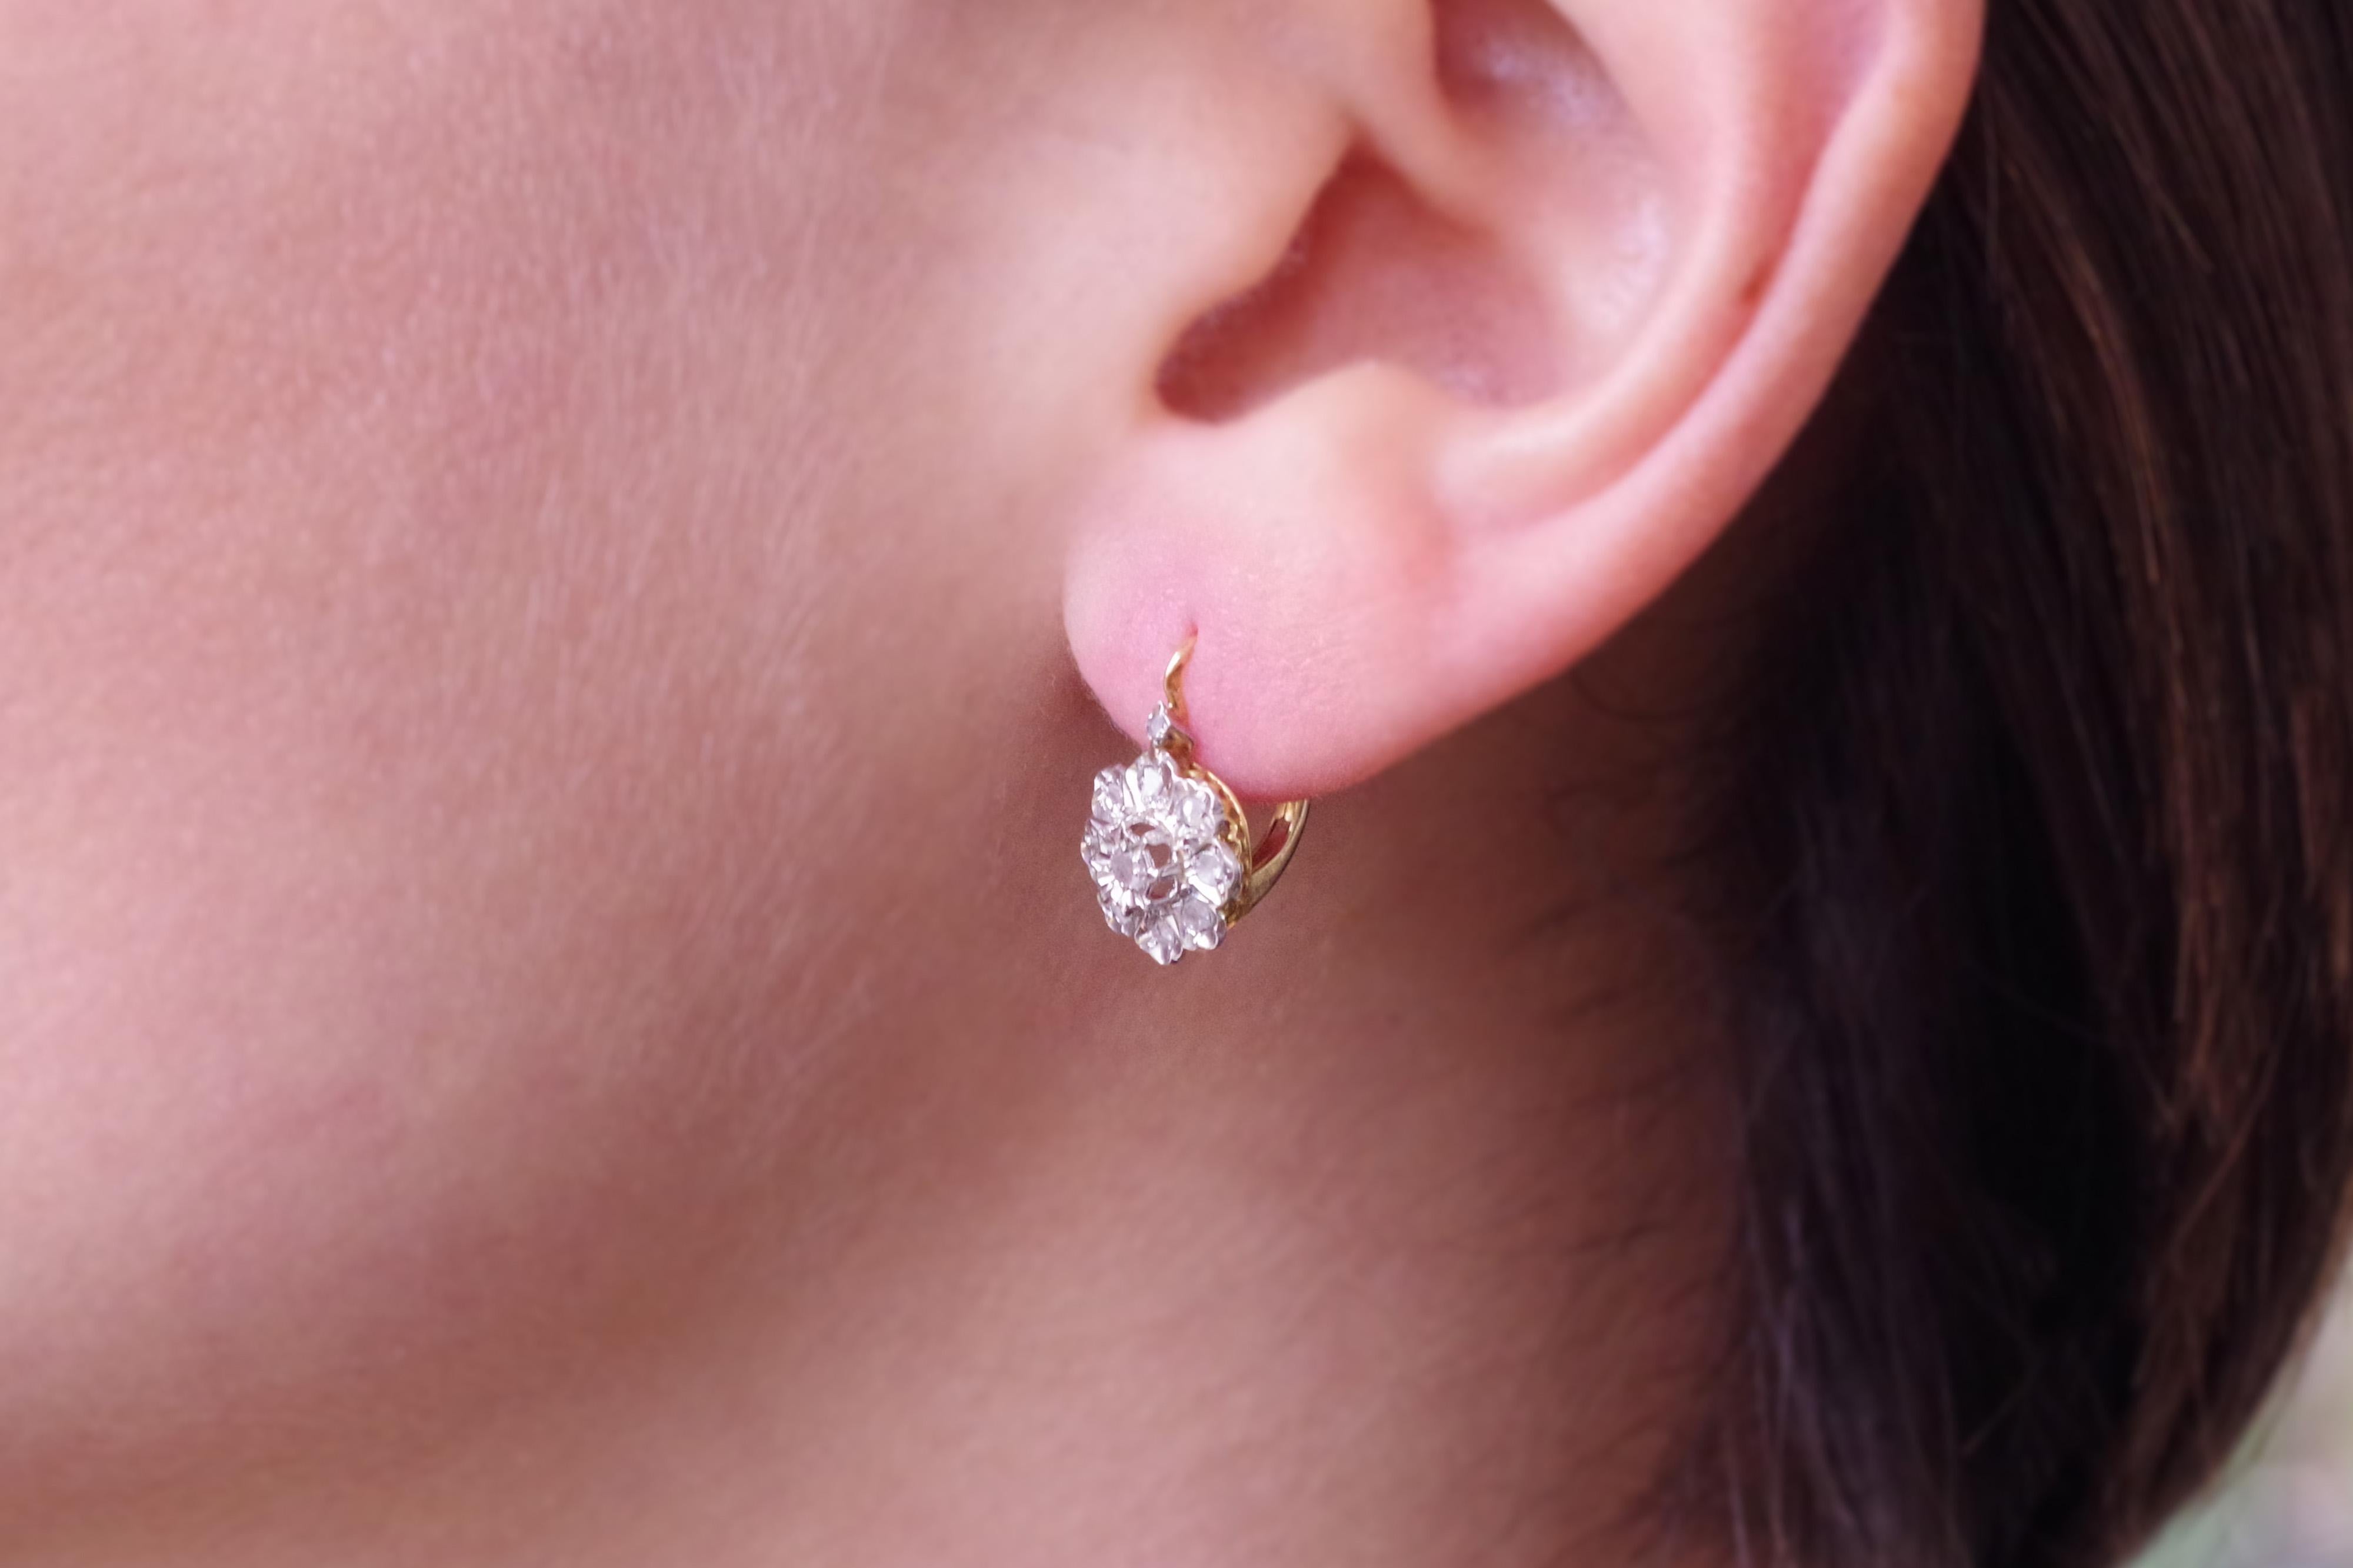 Rose Cut Belle Epoque diamond earrings in 18 karat yellow gold and platinum